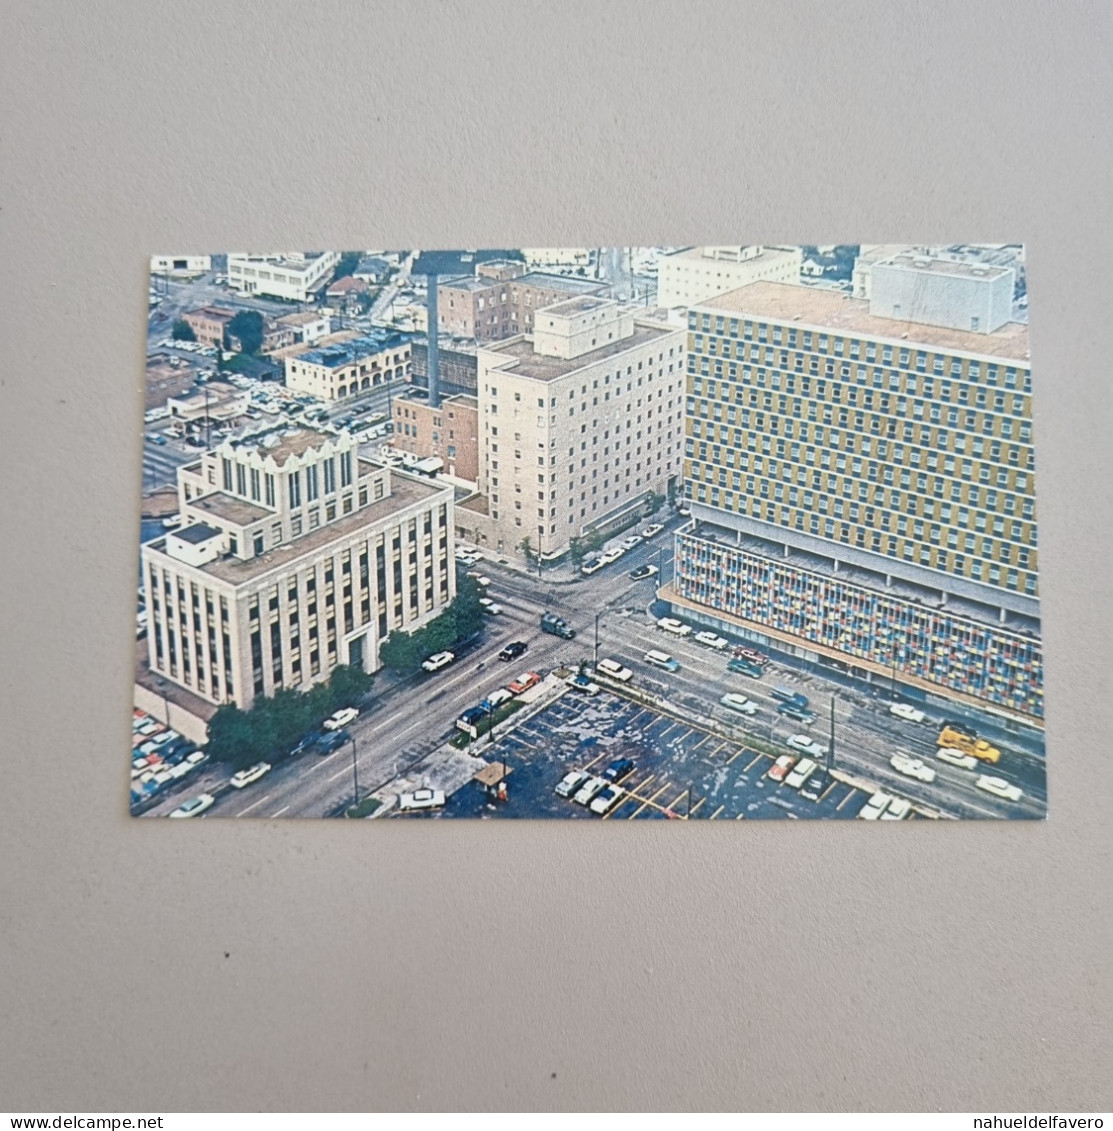 Uncirculated Postcard - TEXAS - MEMORIAL HOSPITAN AND PROFESSIONAL BUILDING, HOUSTON - Houston